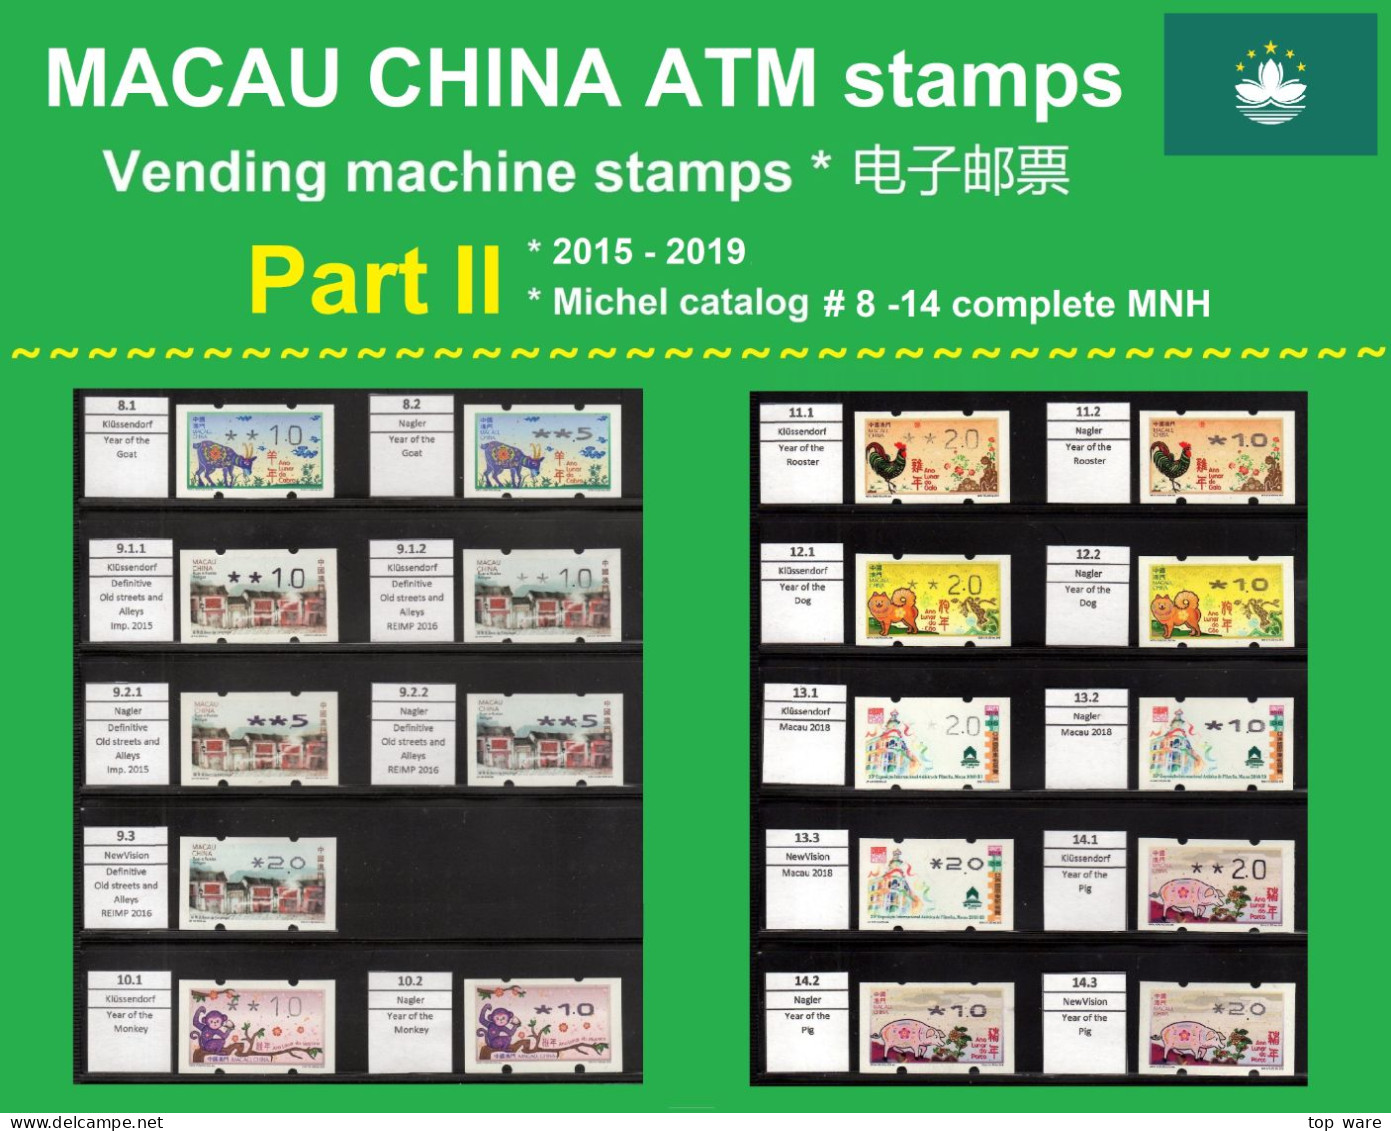 Macau China ATM Sammlung Part II / 2015-2019 MNH / Klussendorf Nagler Frama CVP Automatenmarken - Distributeurs